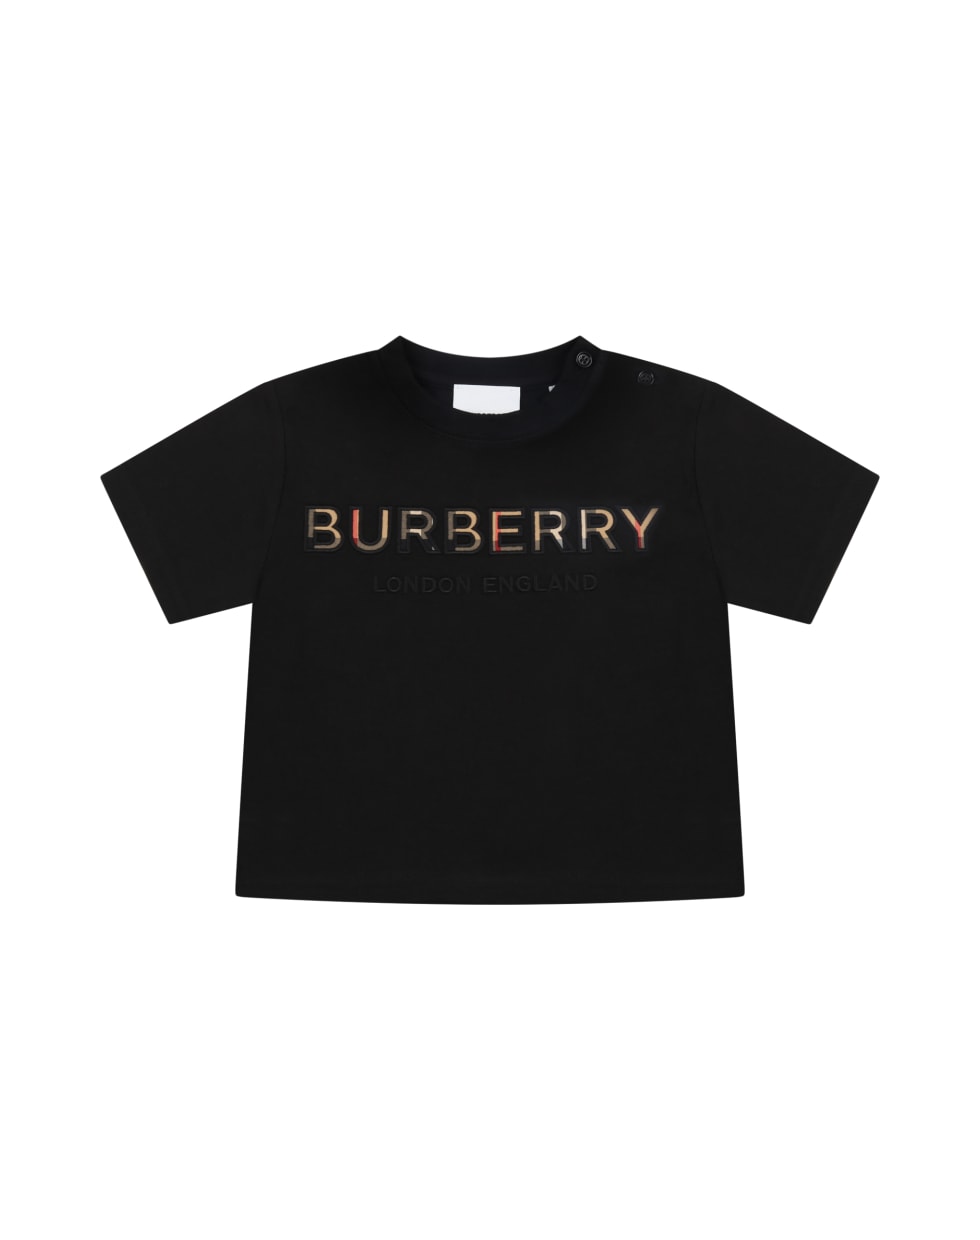 Burberry Black T-shirt For Babykids With Beige Logo - Black